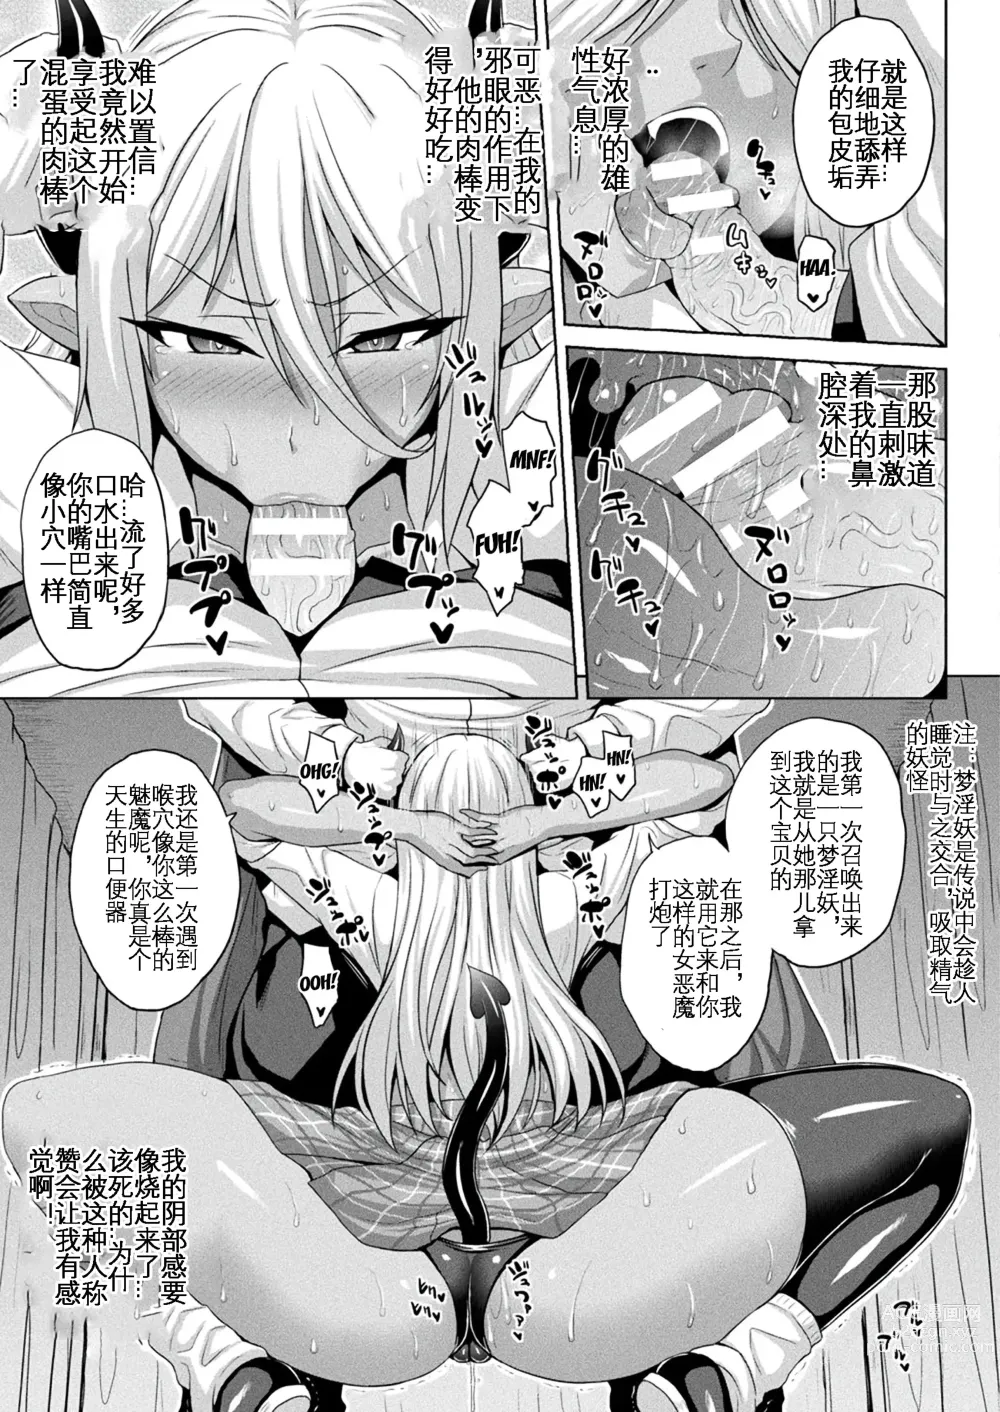 Page 6 of manga Mesubuta Inma no Chigiri - Contract of Bitch Succubus